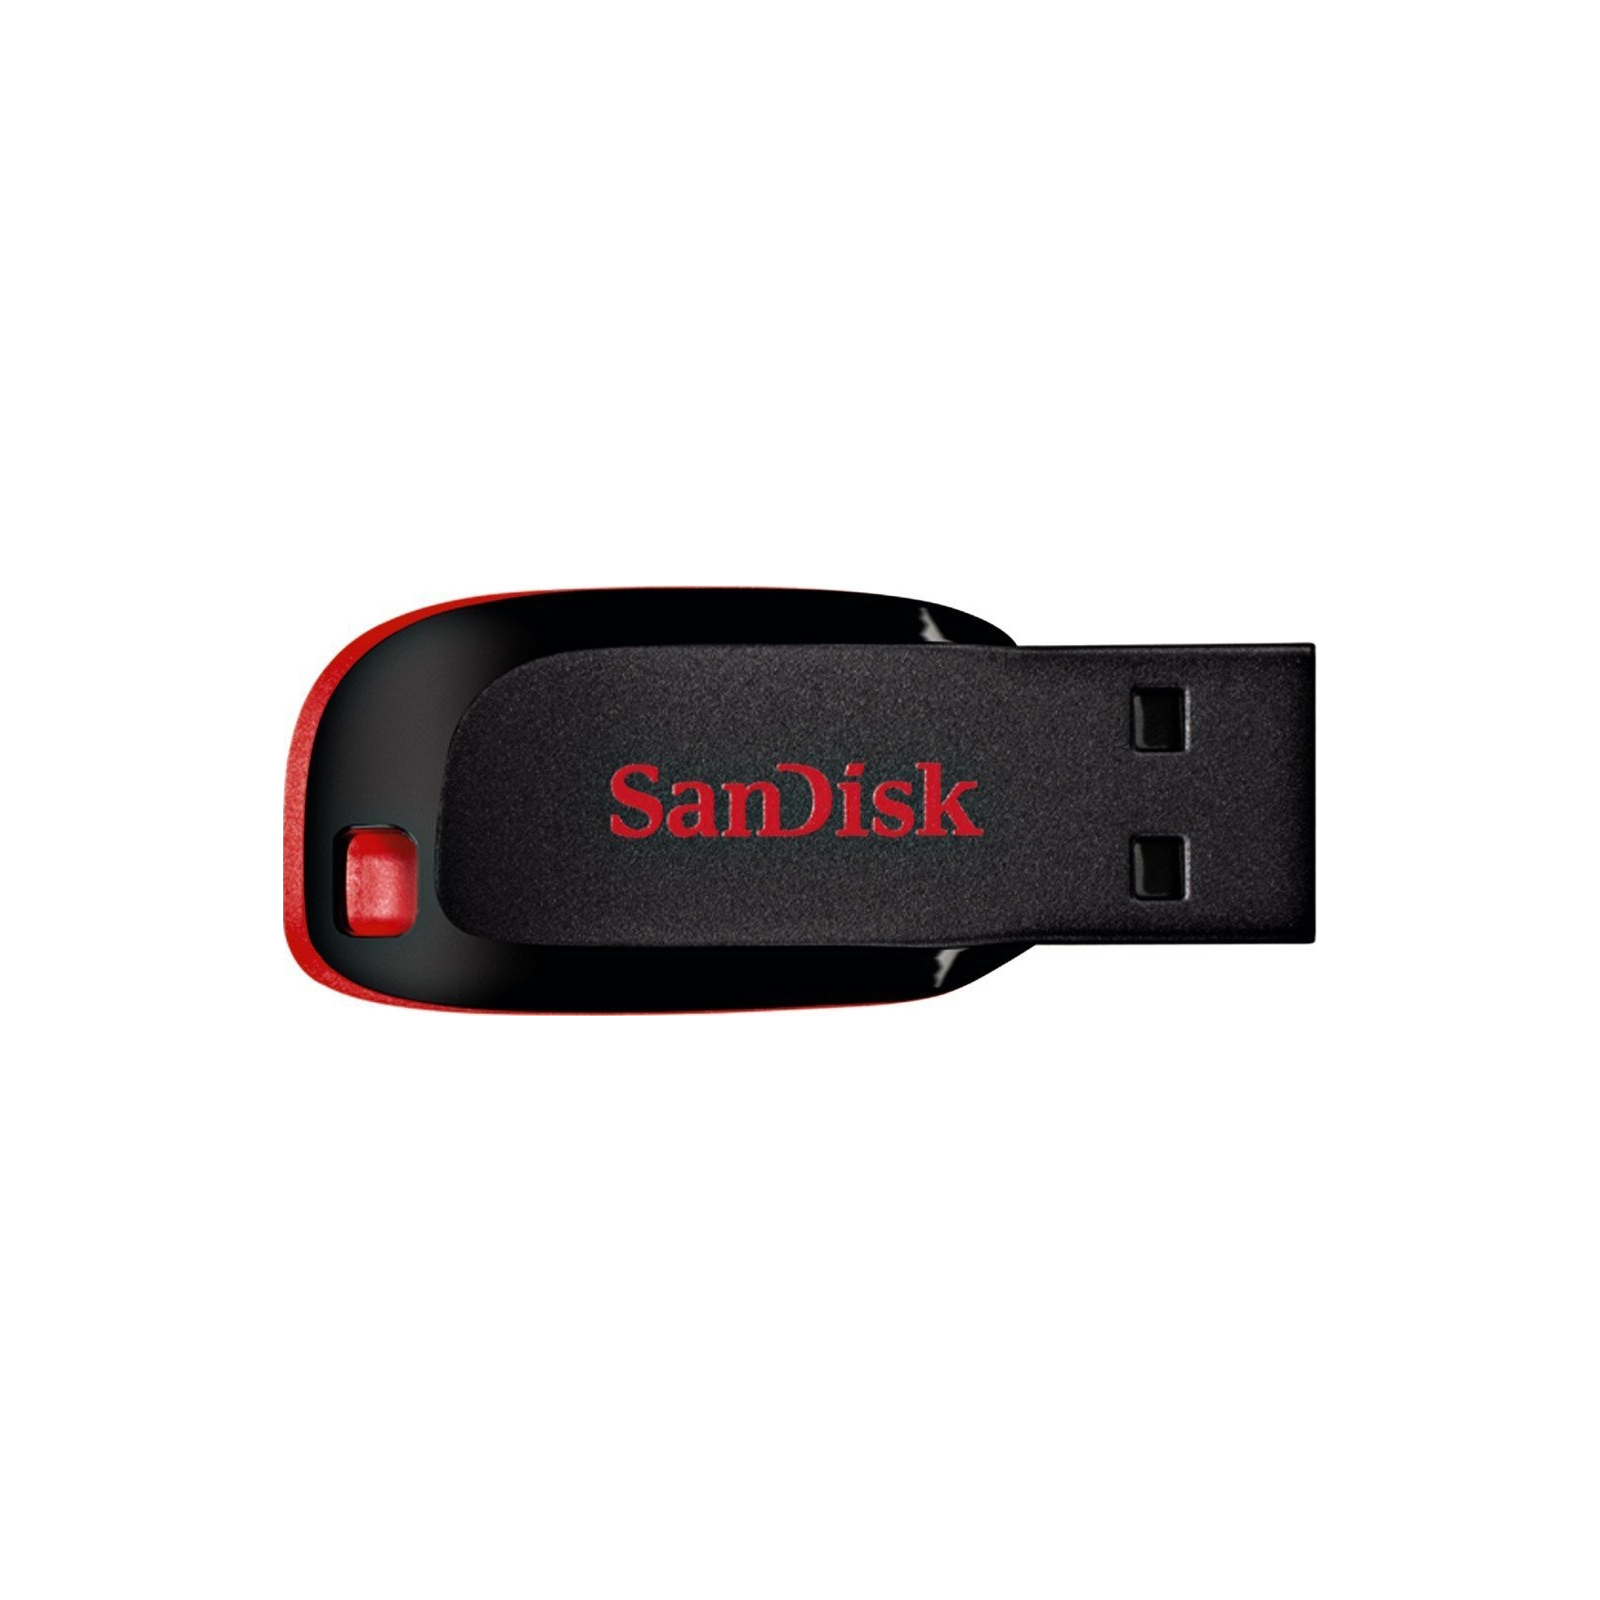 USB флеш накопитель SanDisk 16GB Cruzer Blade Green USB 2.0 (SDCZ50C-016G-B35GE)